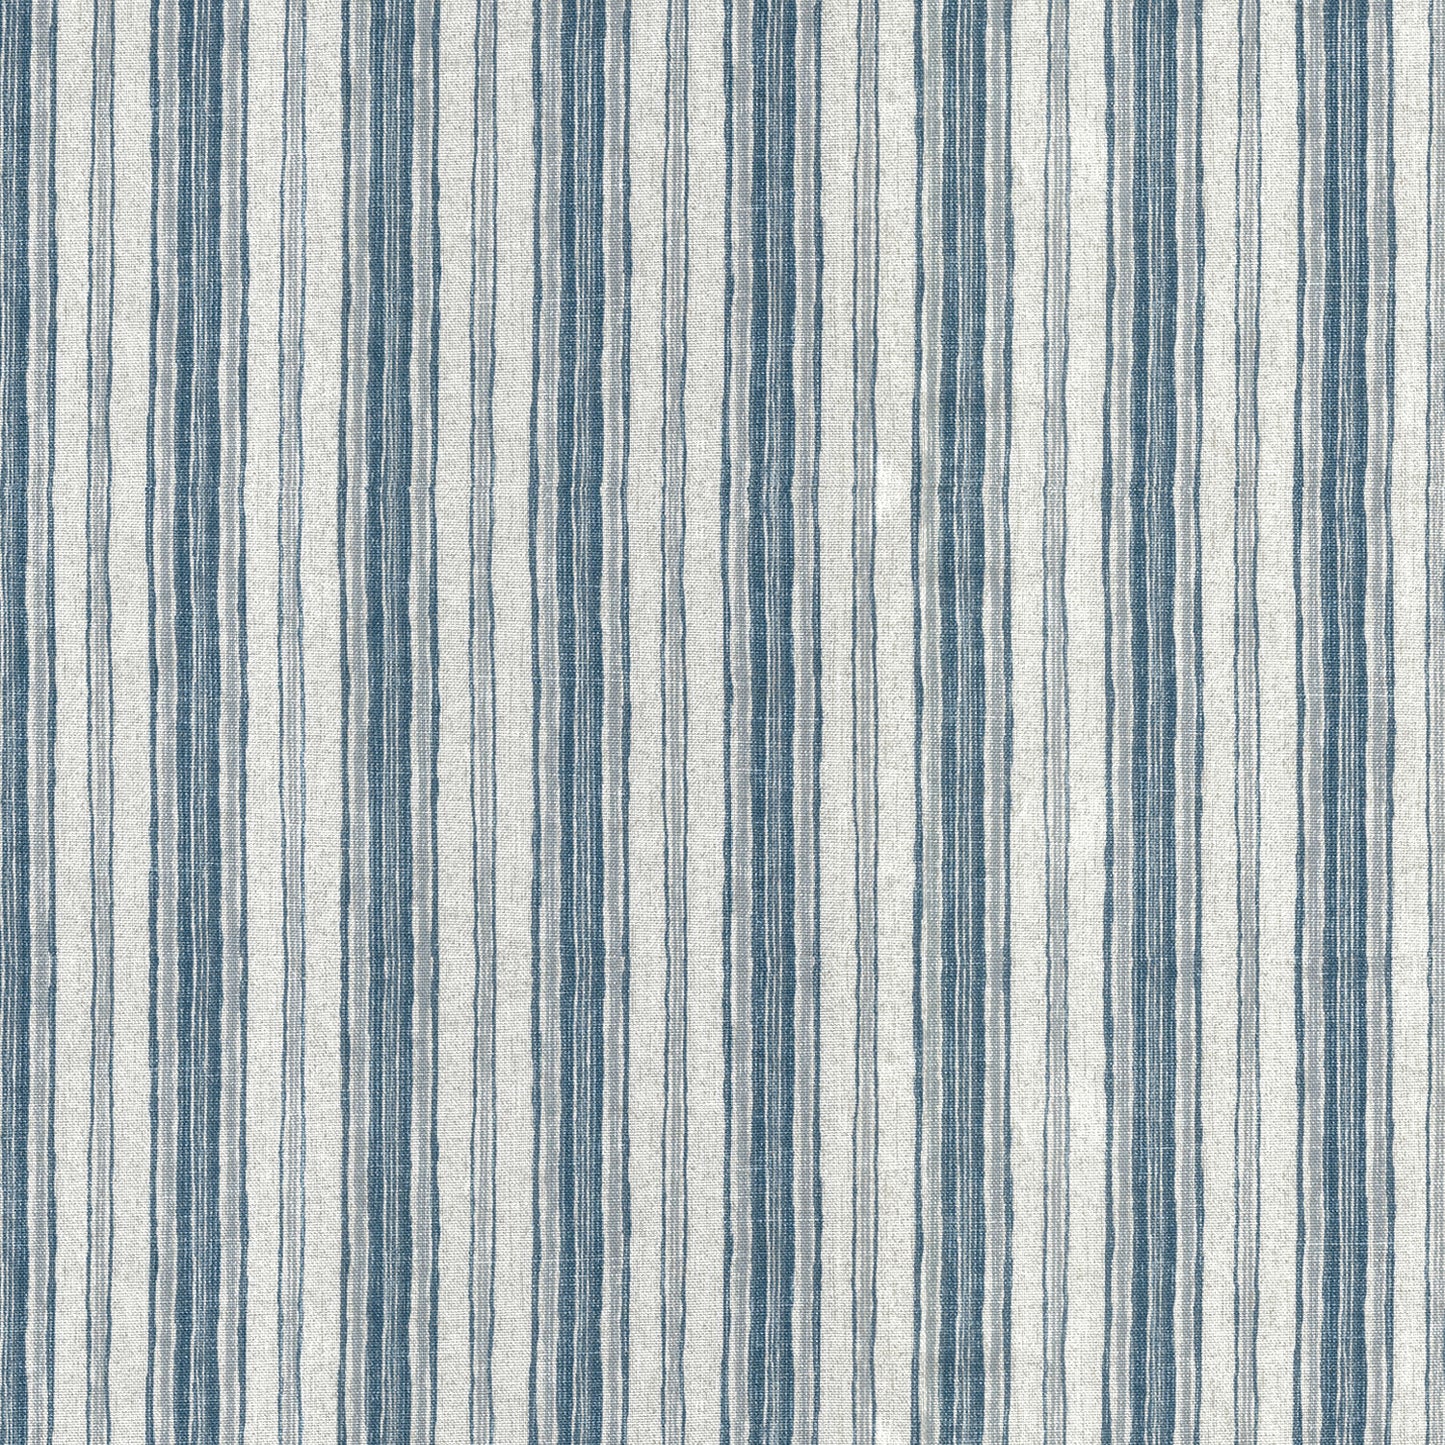 pillow sham in brunswick denim blue stripe